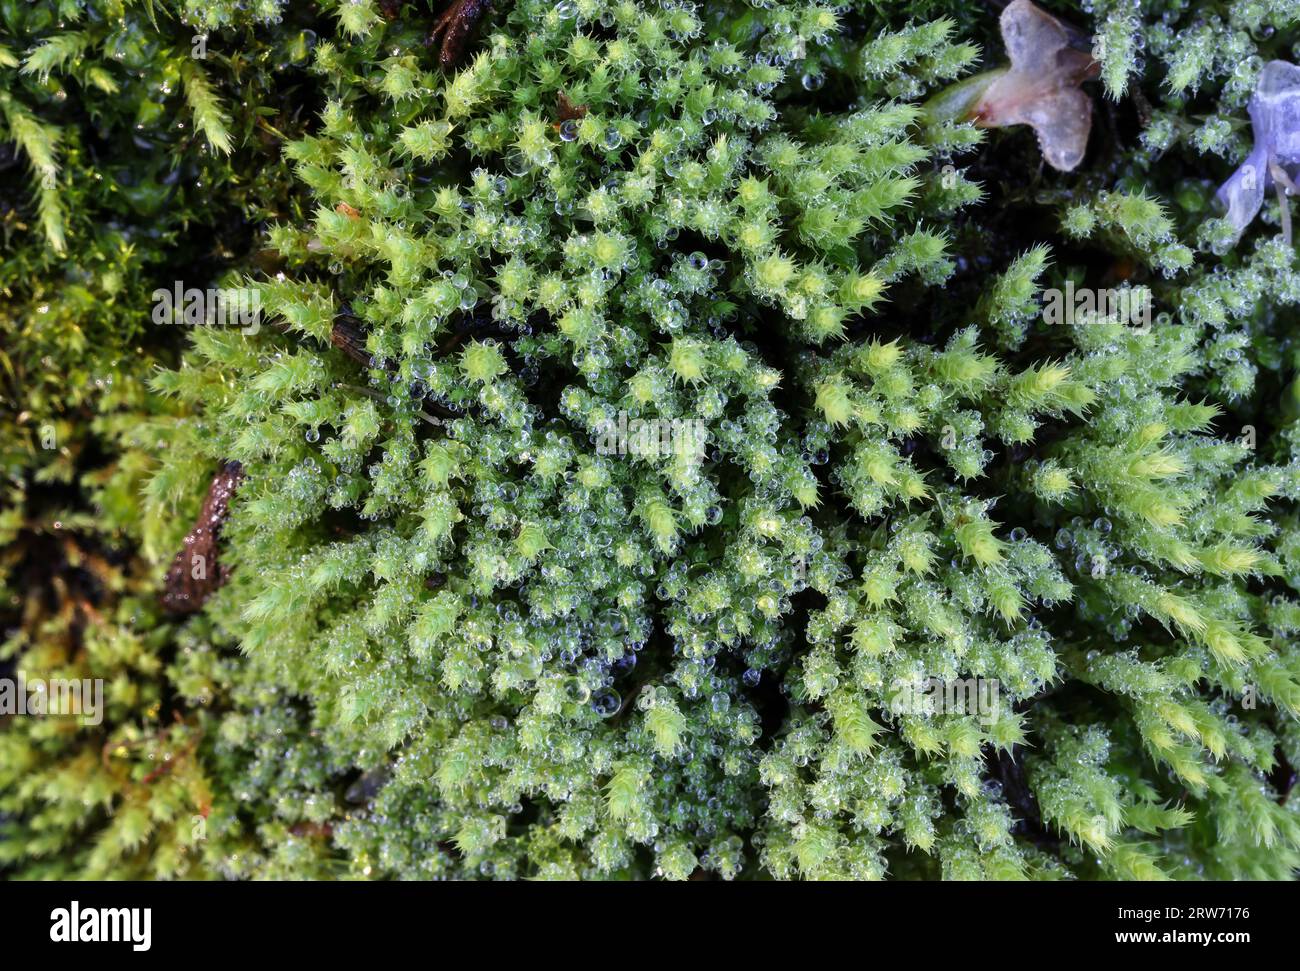 Philonotis tomentella moss Stock Photo